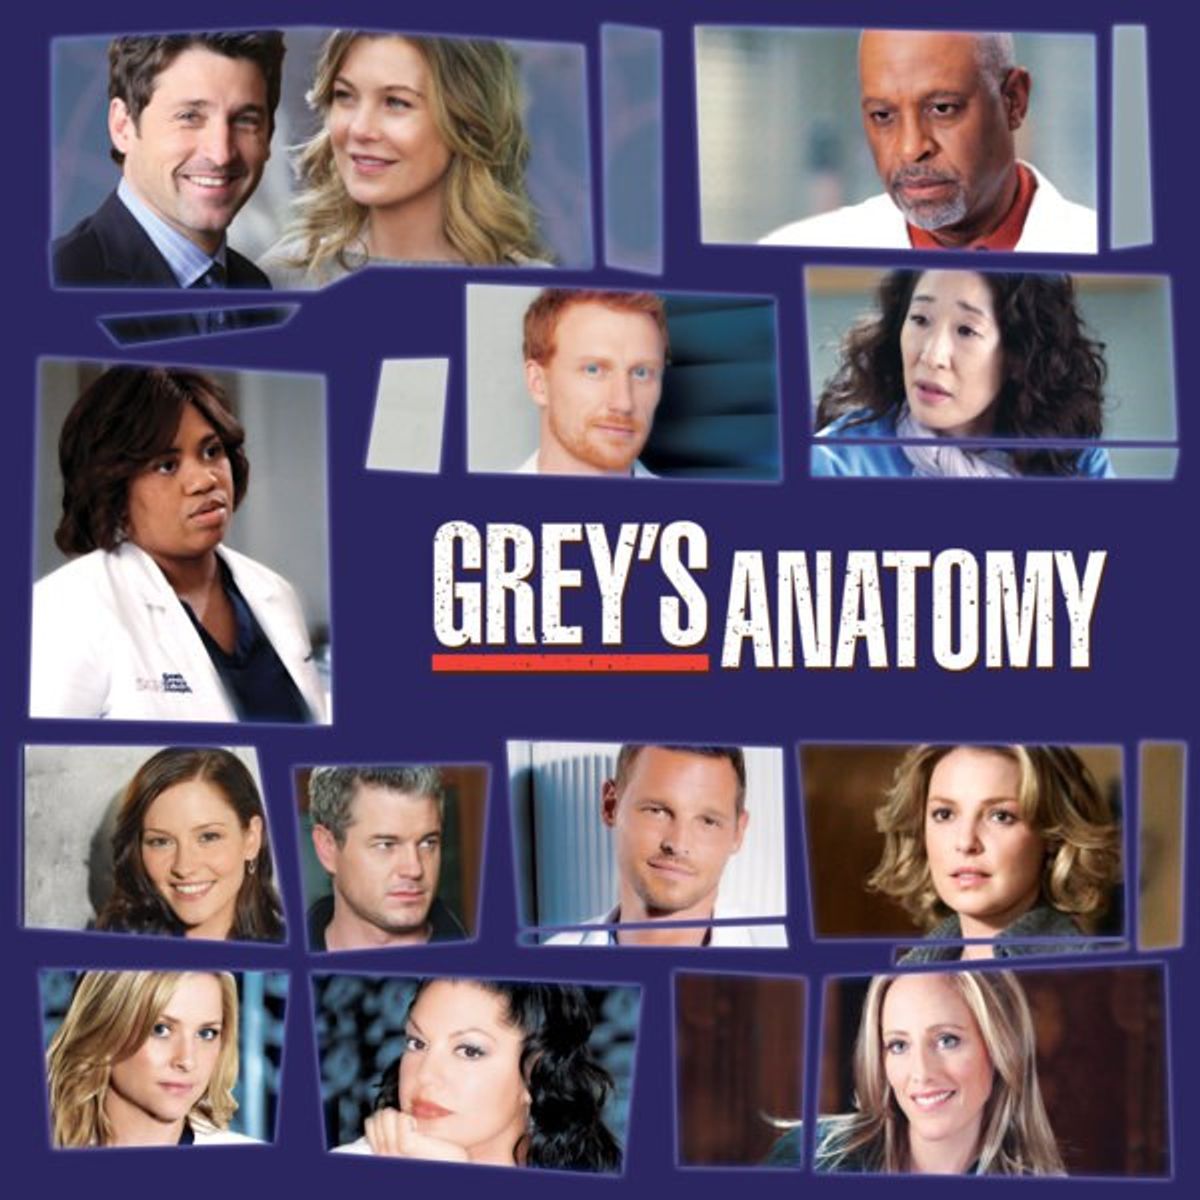 20 Reasons To Watch "Grey's Anatomy"